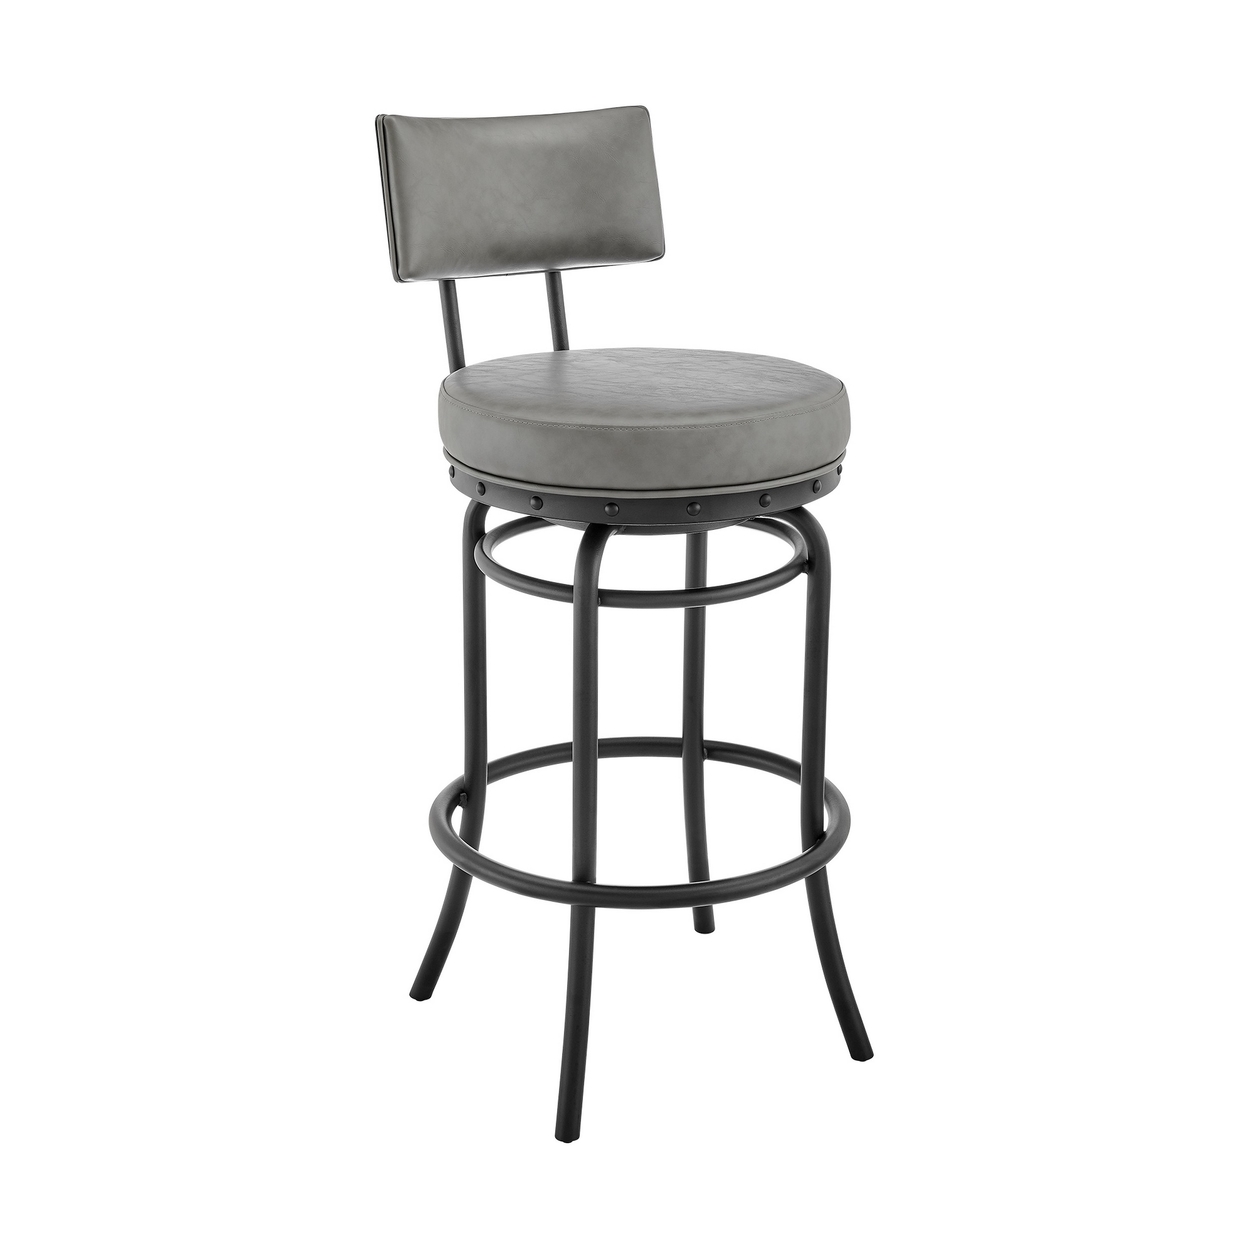 Felicity 30 Inch Round Swivel Bar Stool Chair, Gray Faux Leather Cushions- Saltoro Sherpi